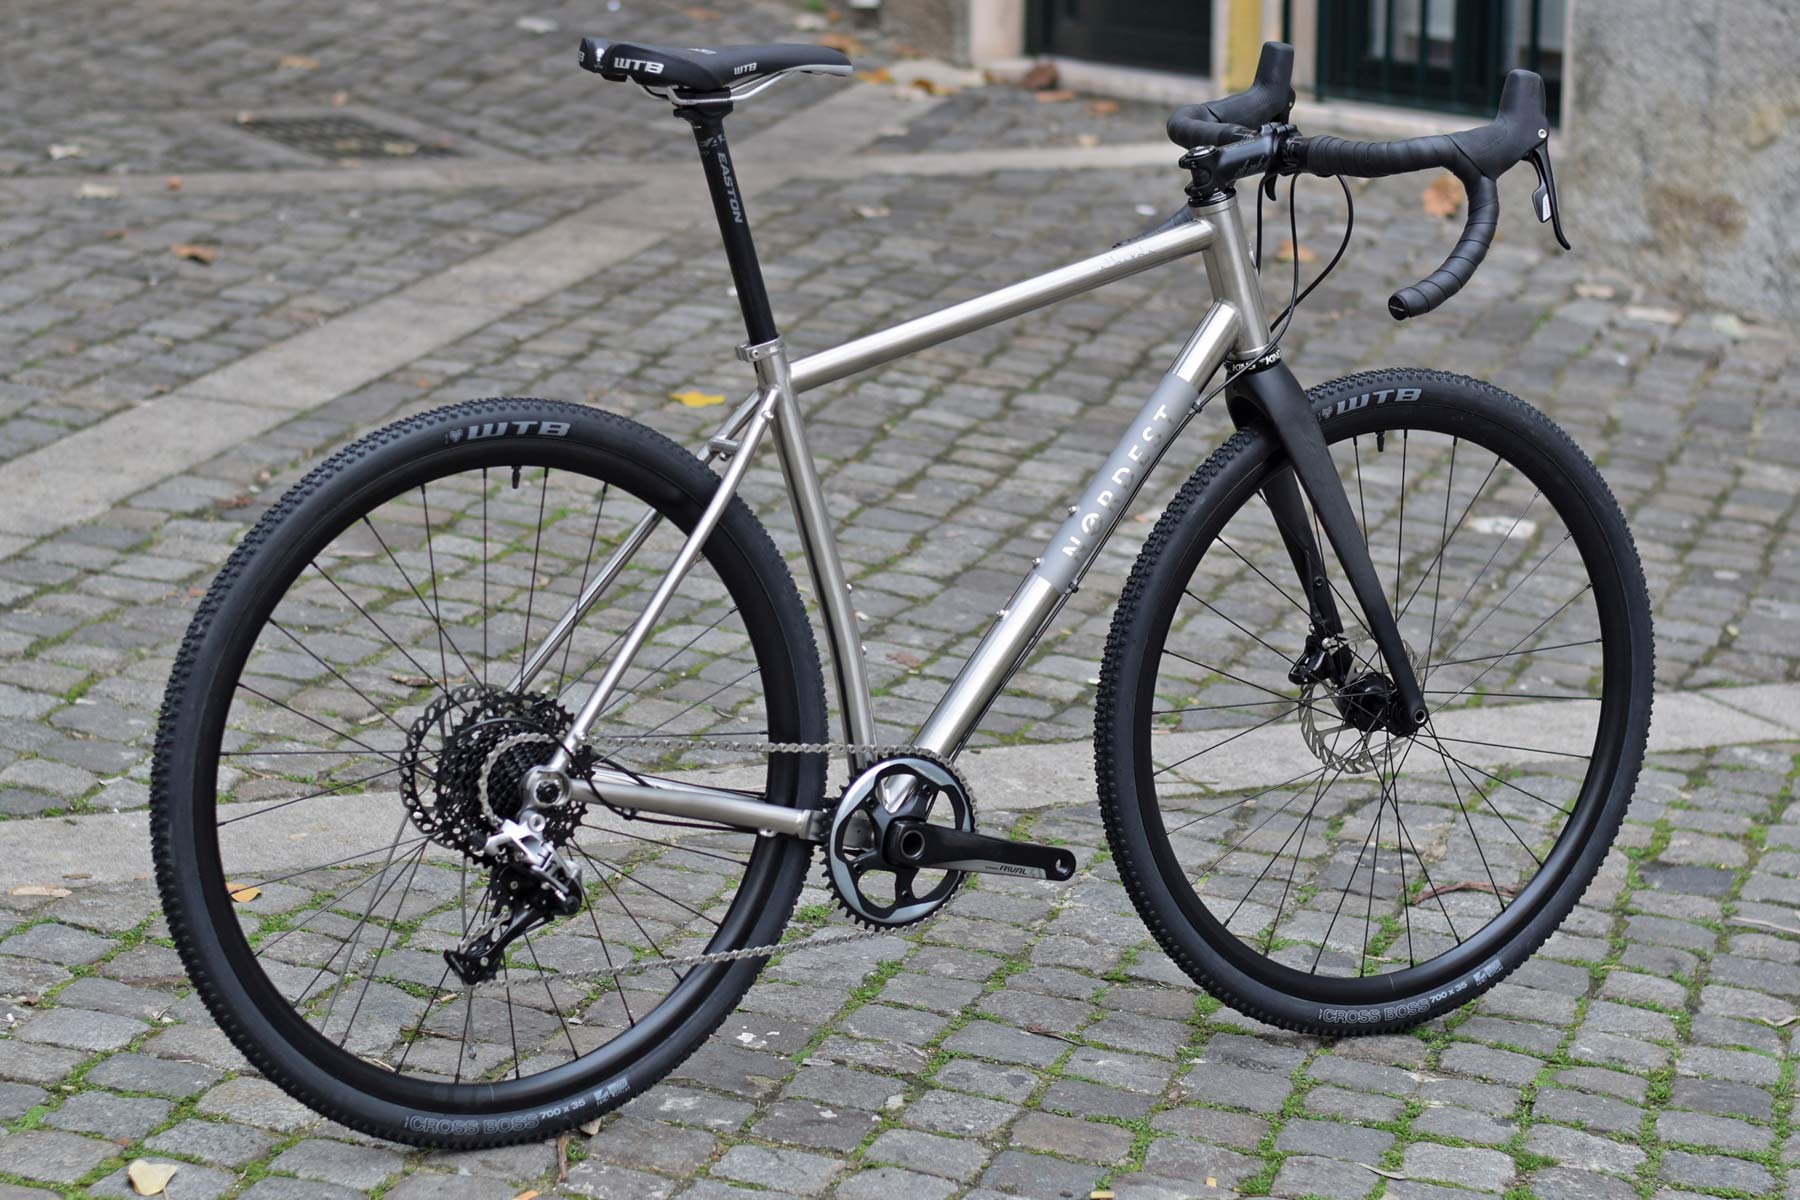 Nordest Albarda Ti affordable titanium all-road adventure gravel bike